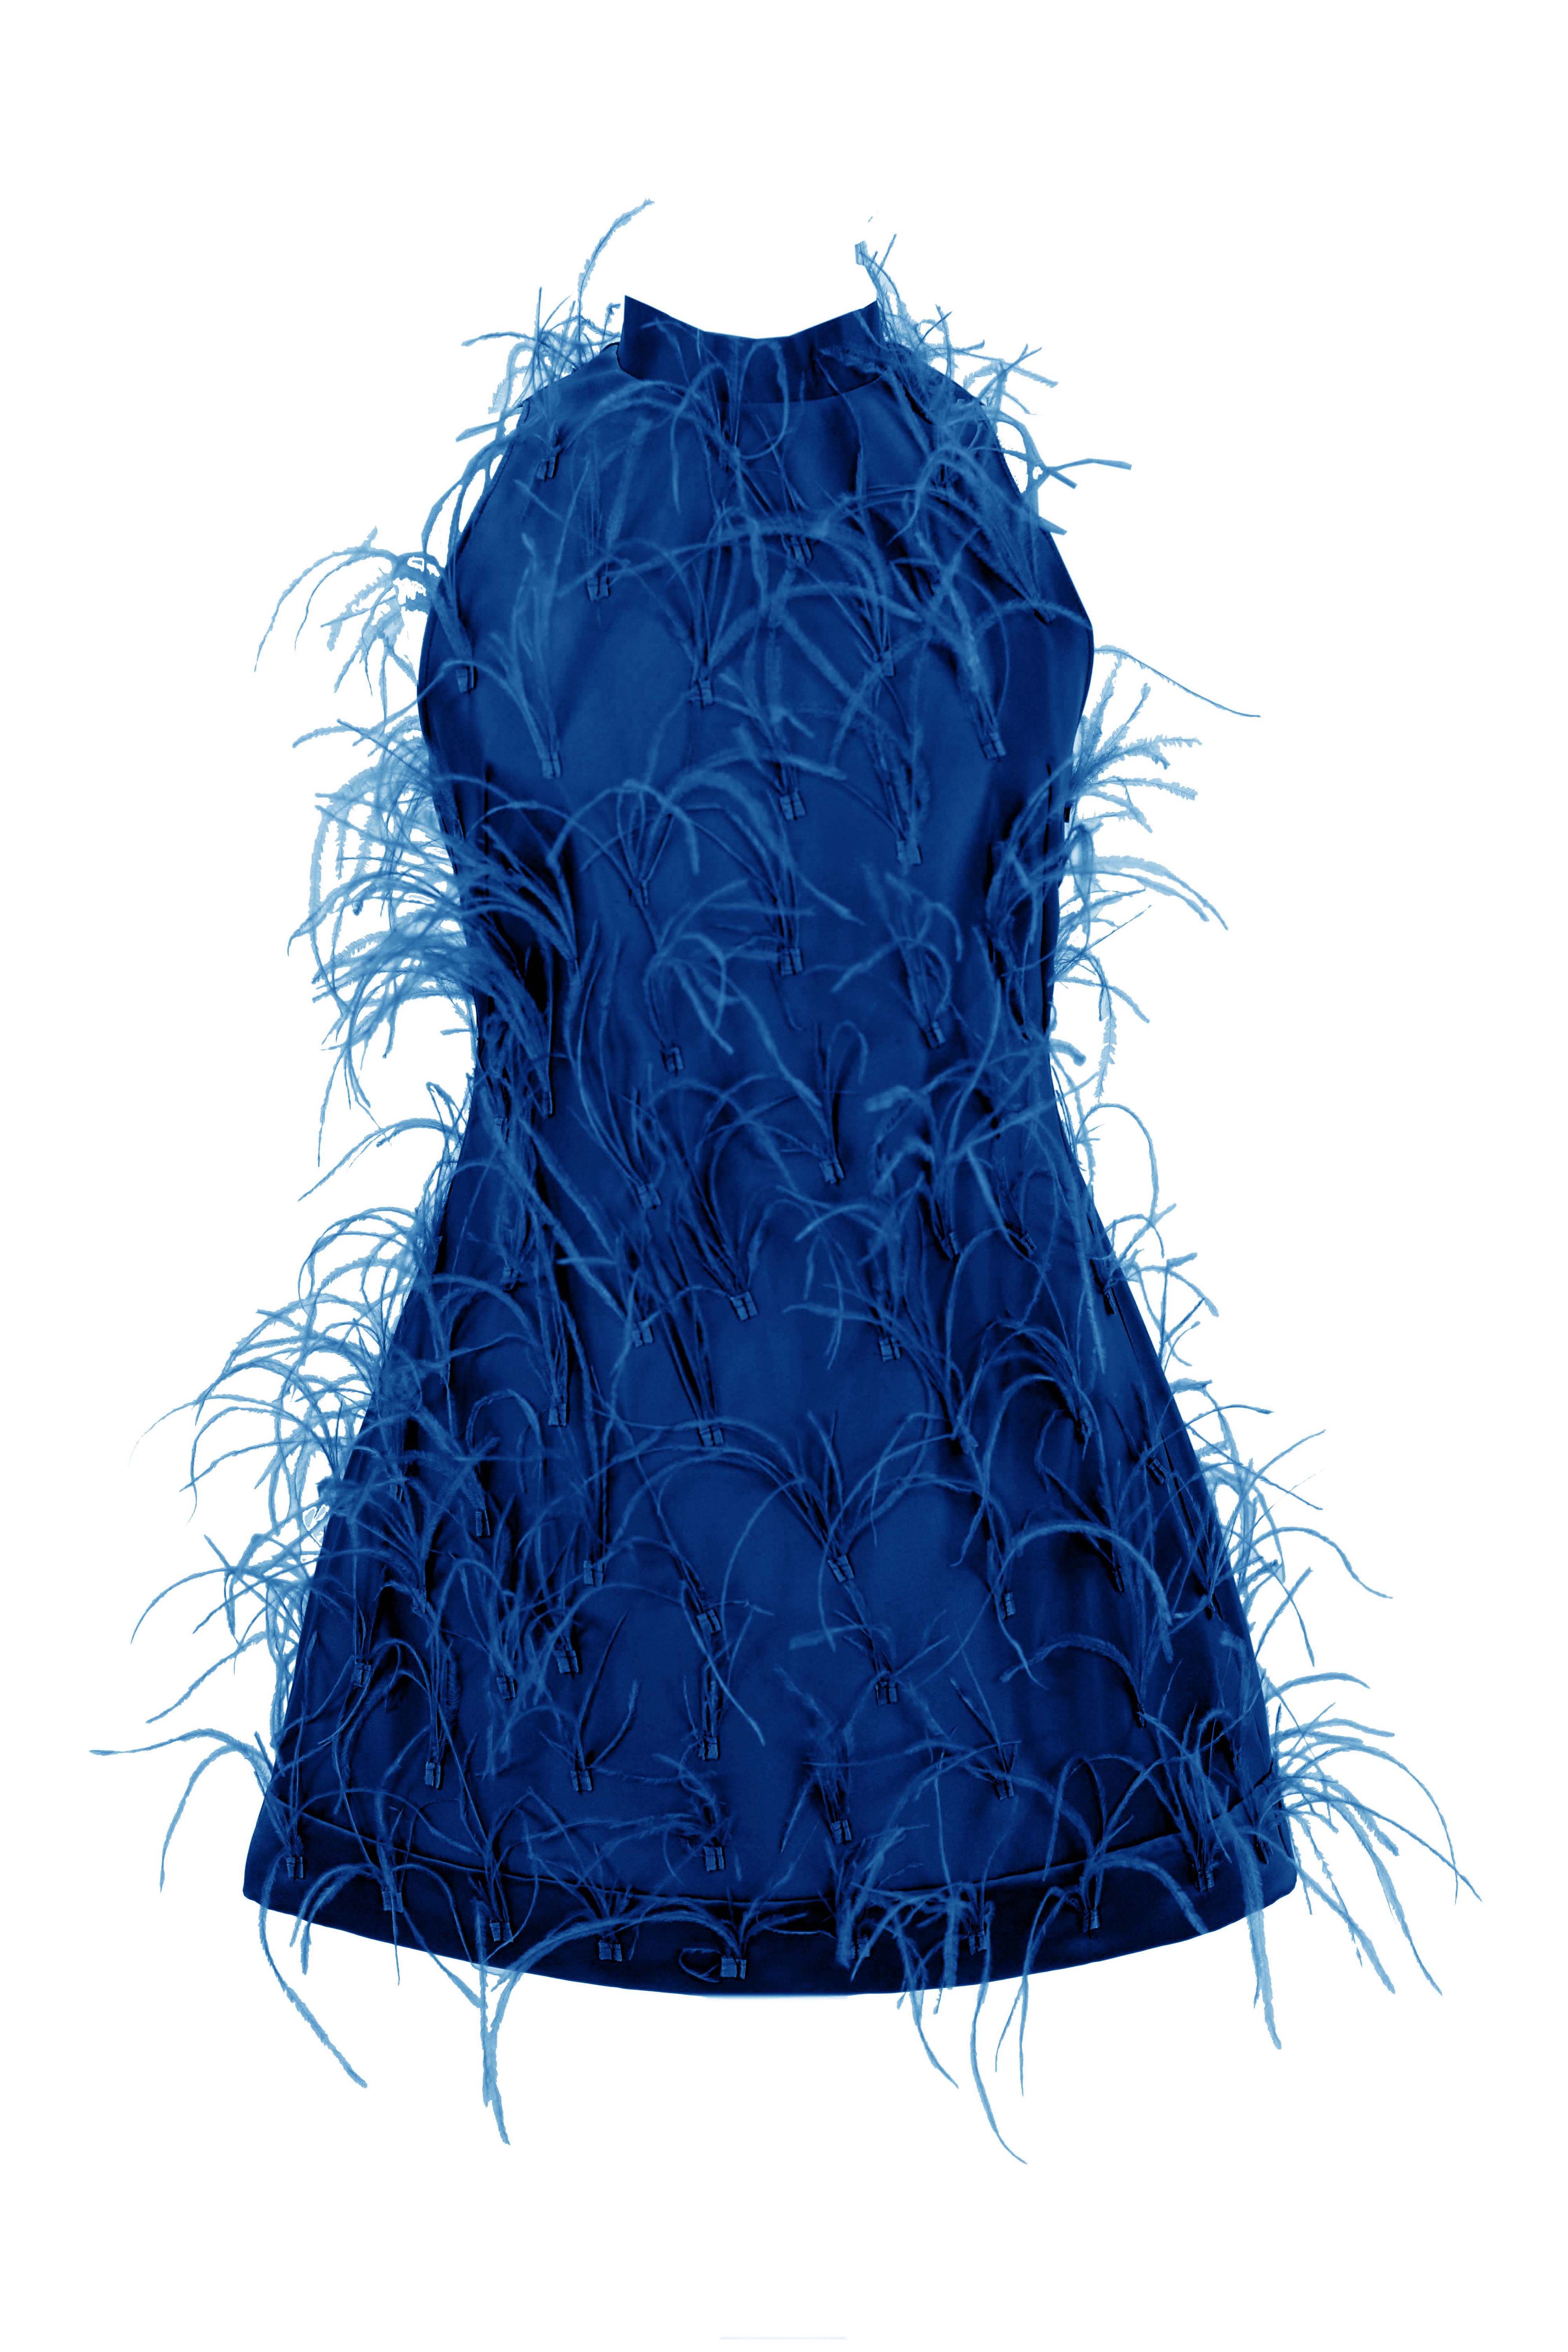 R23101 - ROYAL BLUE 01 - ALMEEA royal blue mini dress with feathers - AMBAR STUDIO